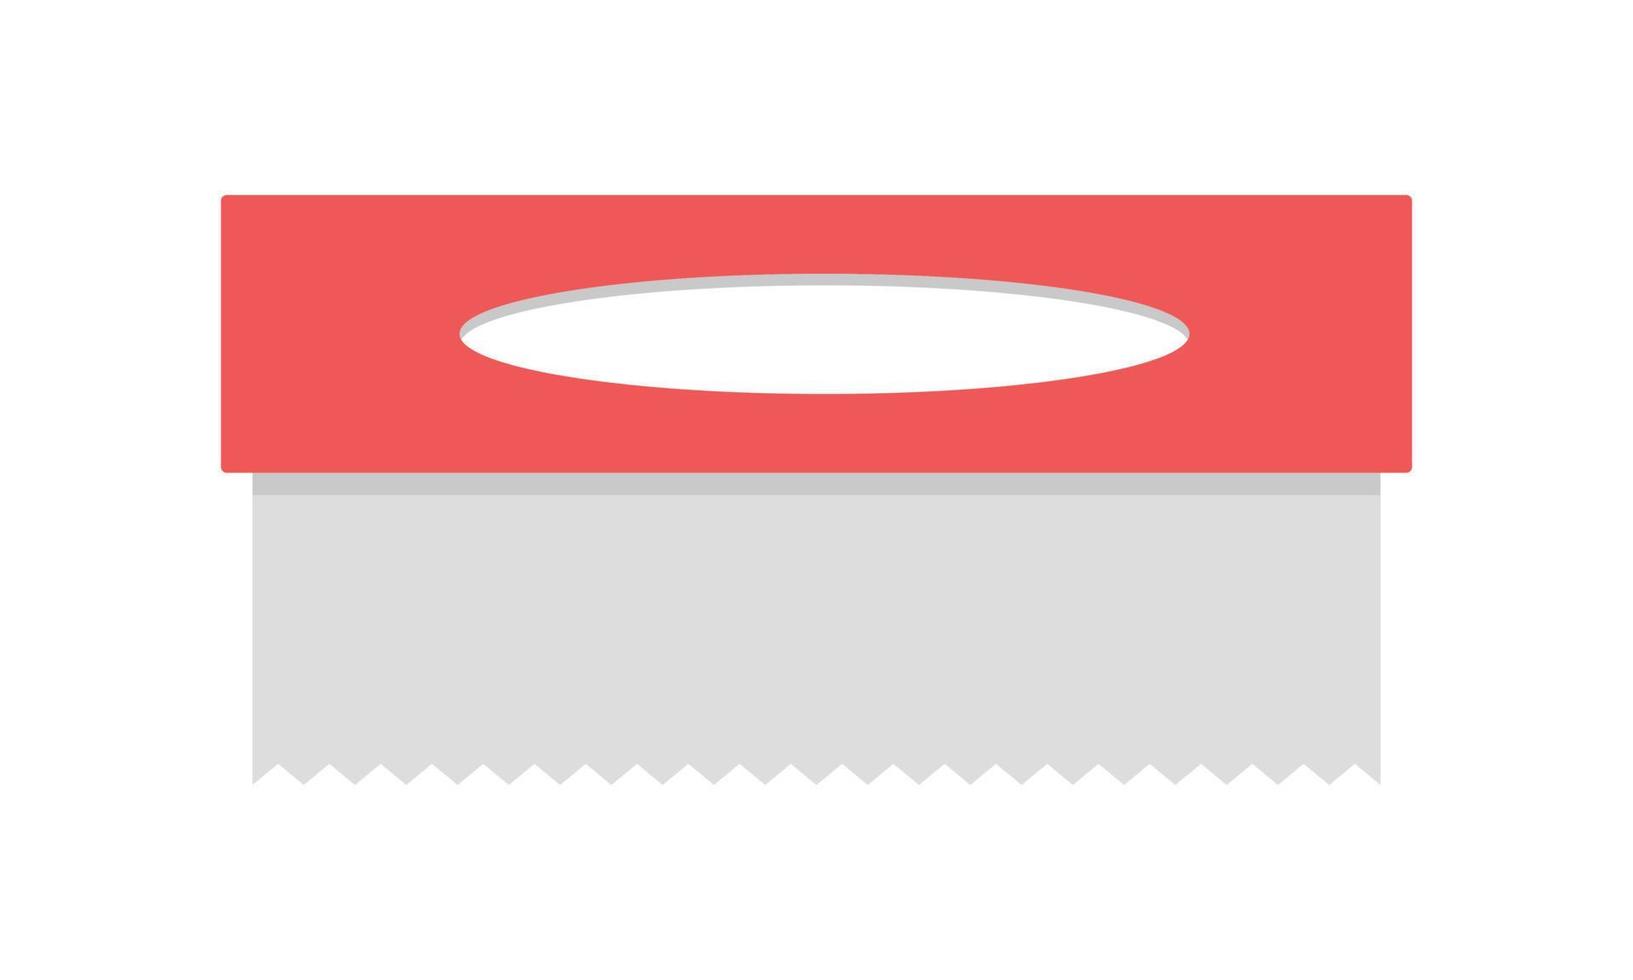 Aluminium foil clipart vector illustration. Simple aluminium foil paper box flat style vector design. Aluminium foil roll sign icon. Kitchen foil cartoon clipart. Kitchen and cooking concept symbol